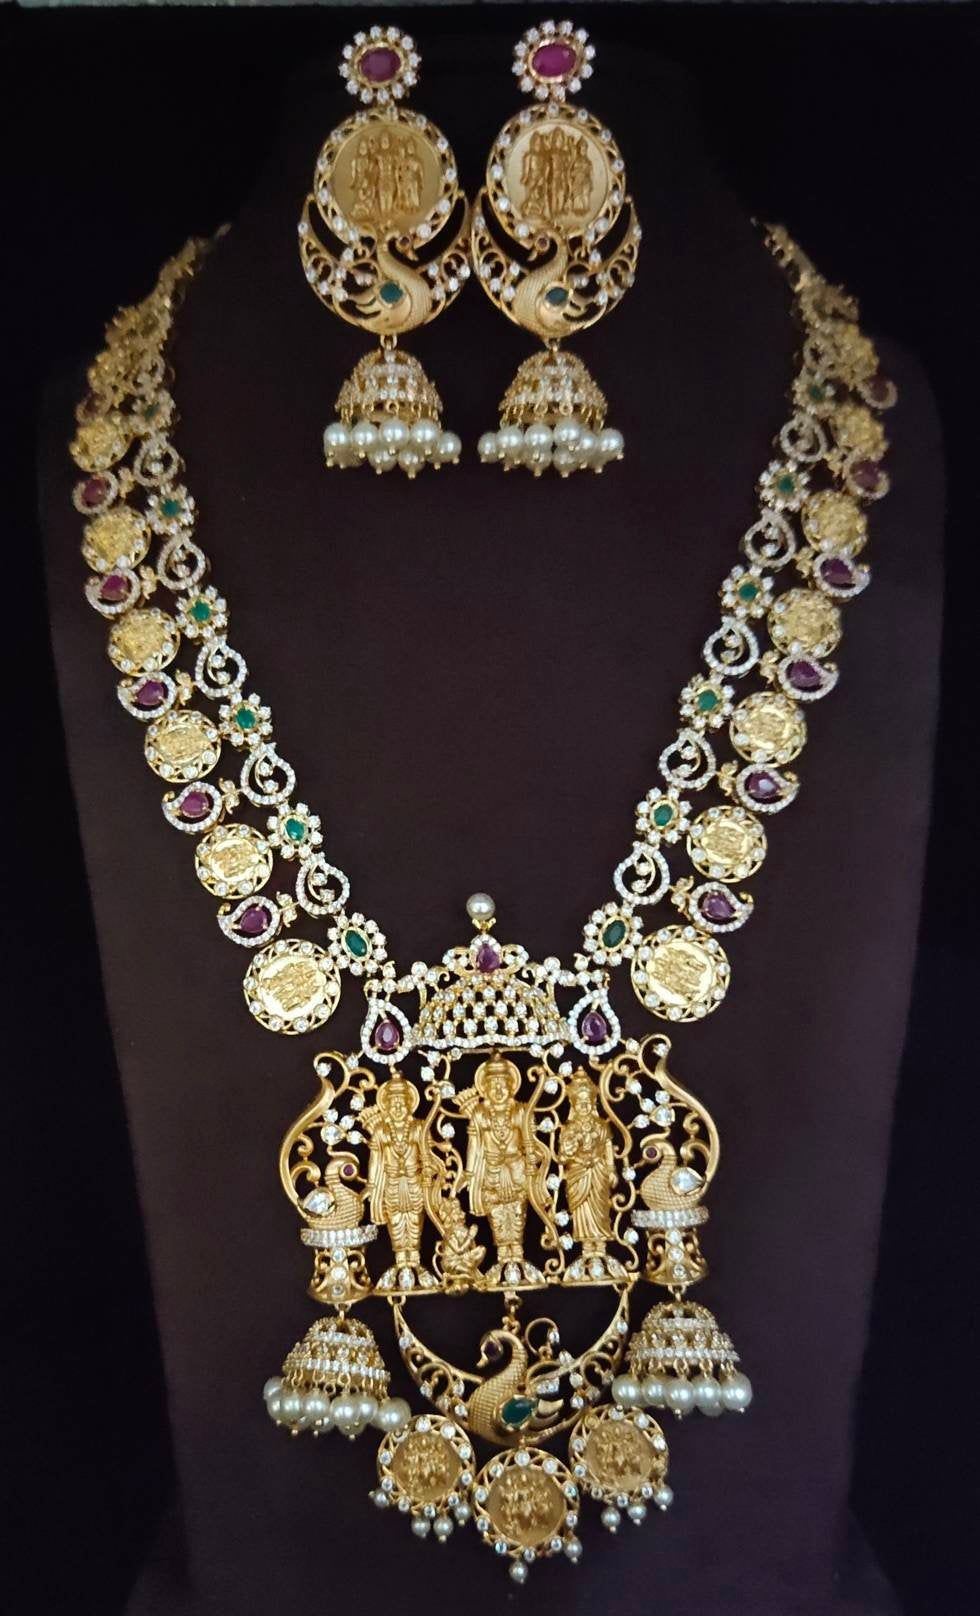 Most beautiful uncut Polki ram parivar necklace with earrings